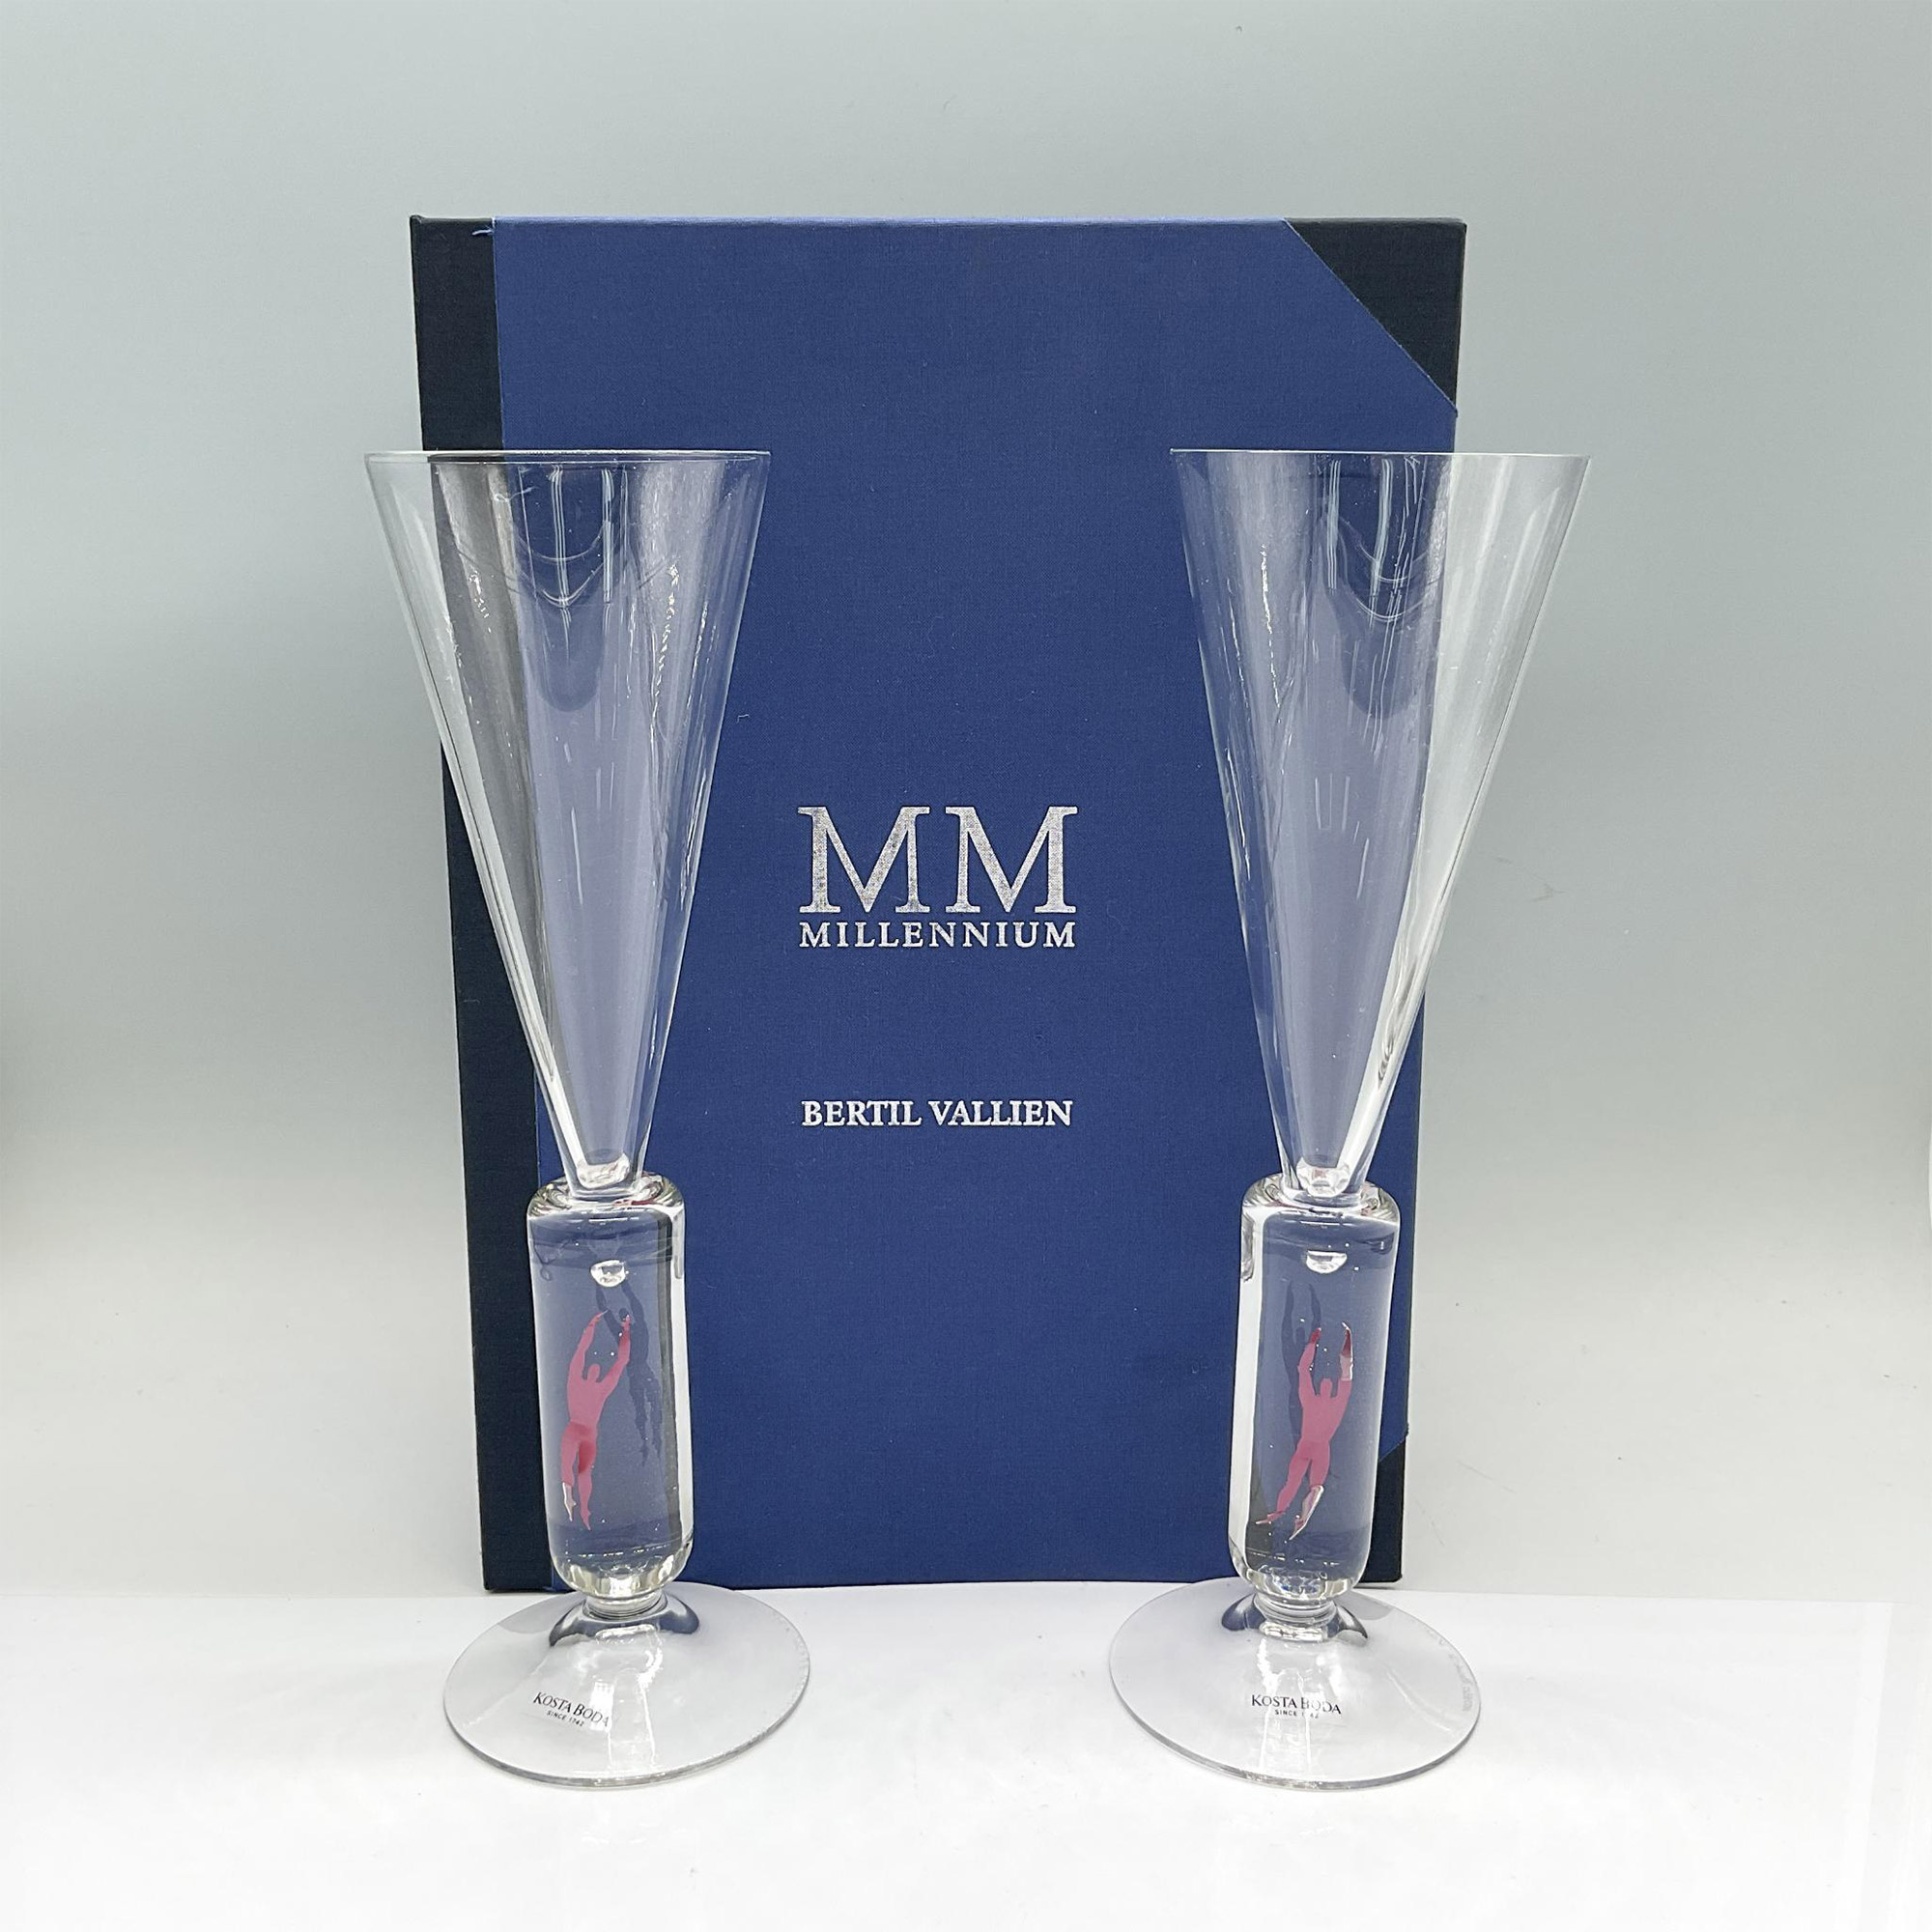 Pair of Kosta Boda Champagne Glasses, MM Millennium - Image 2 of 5